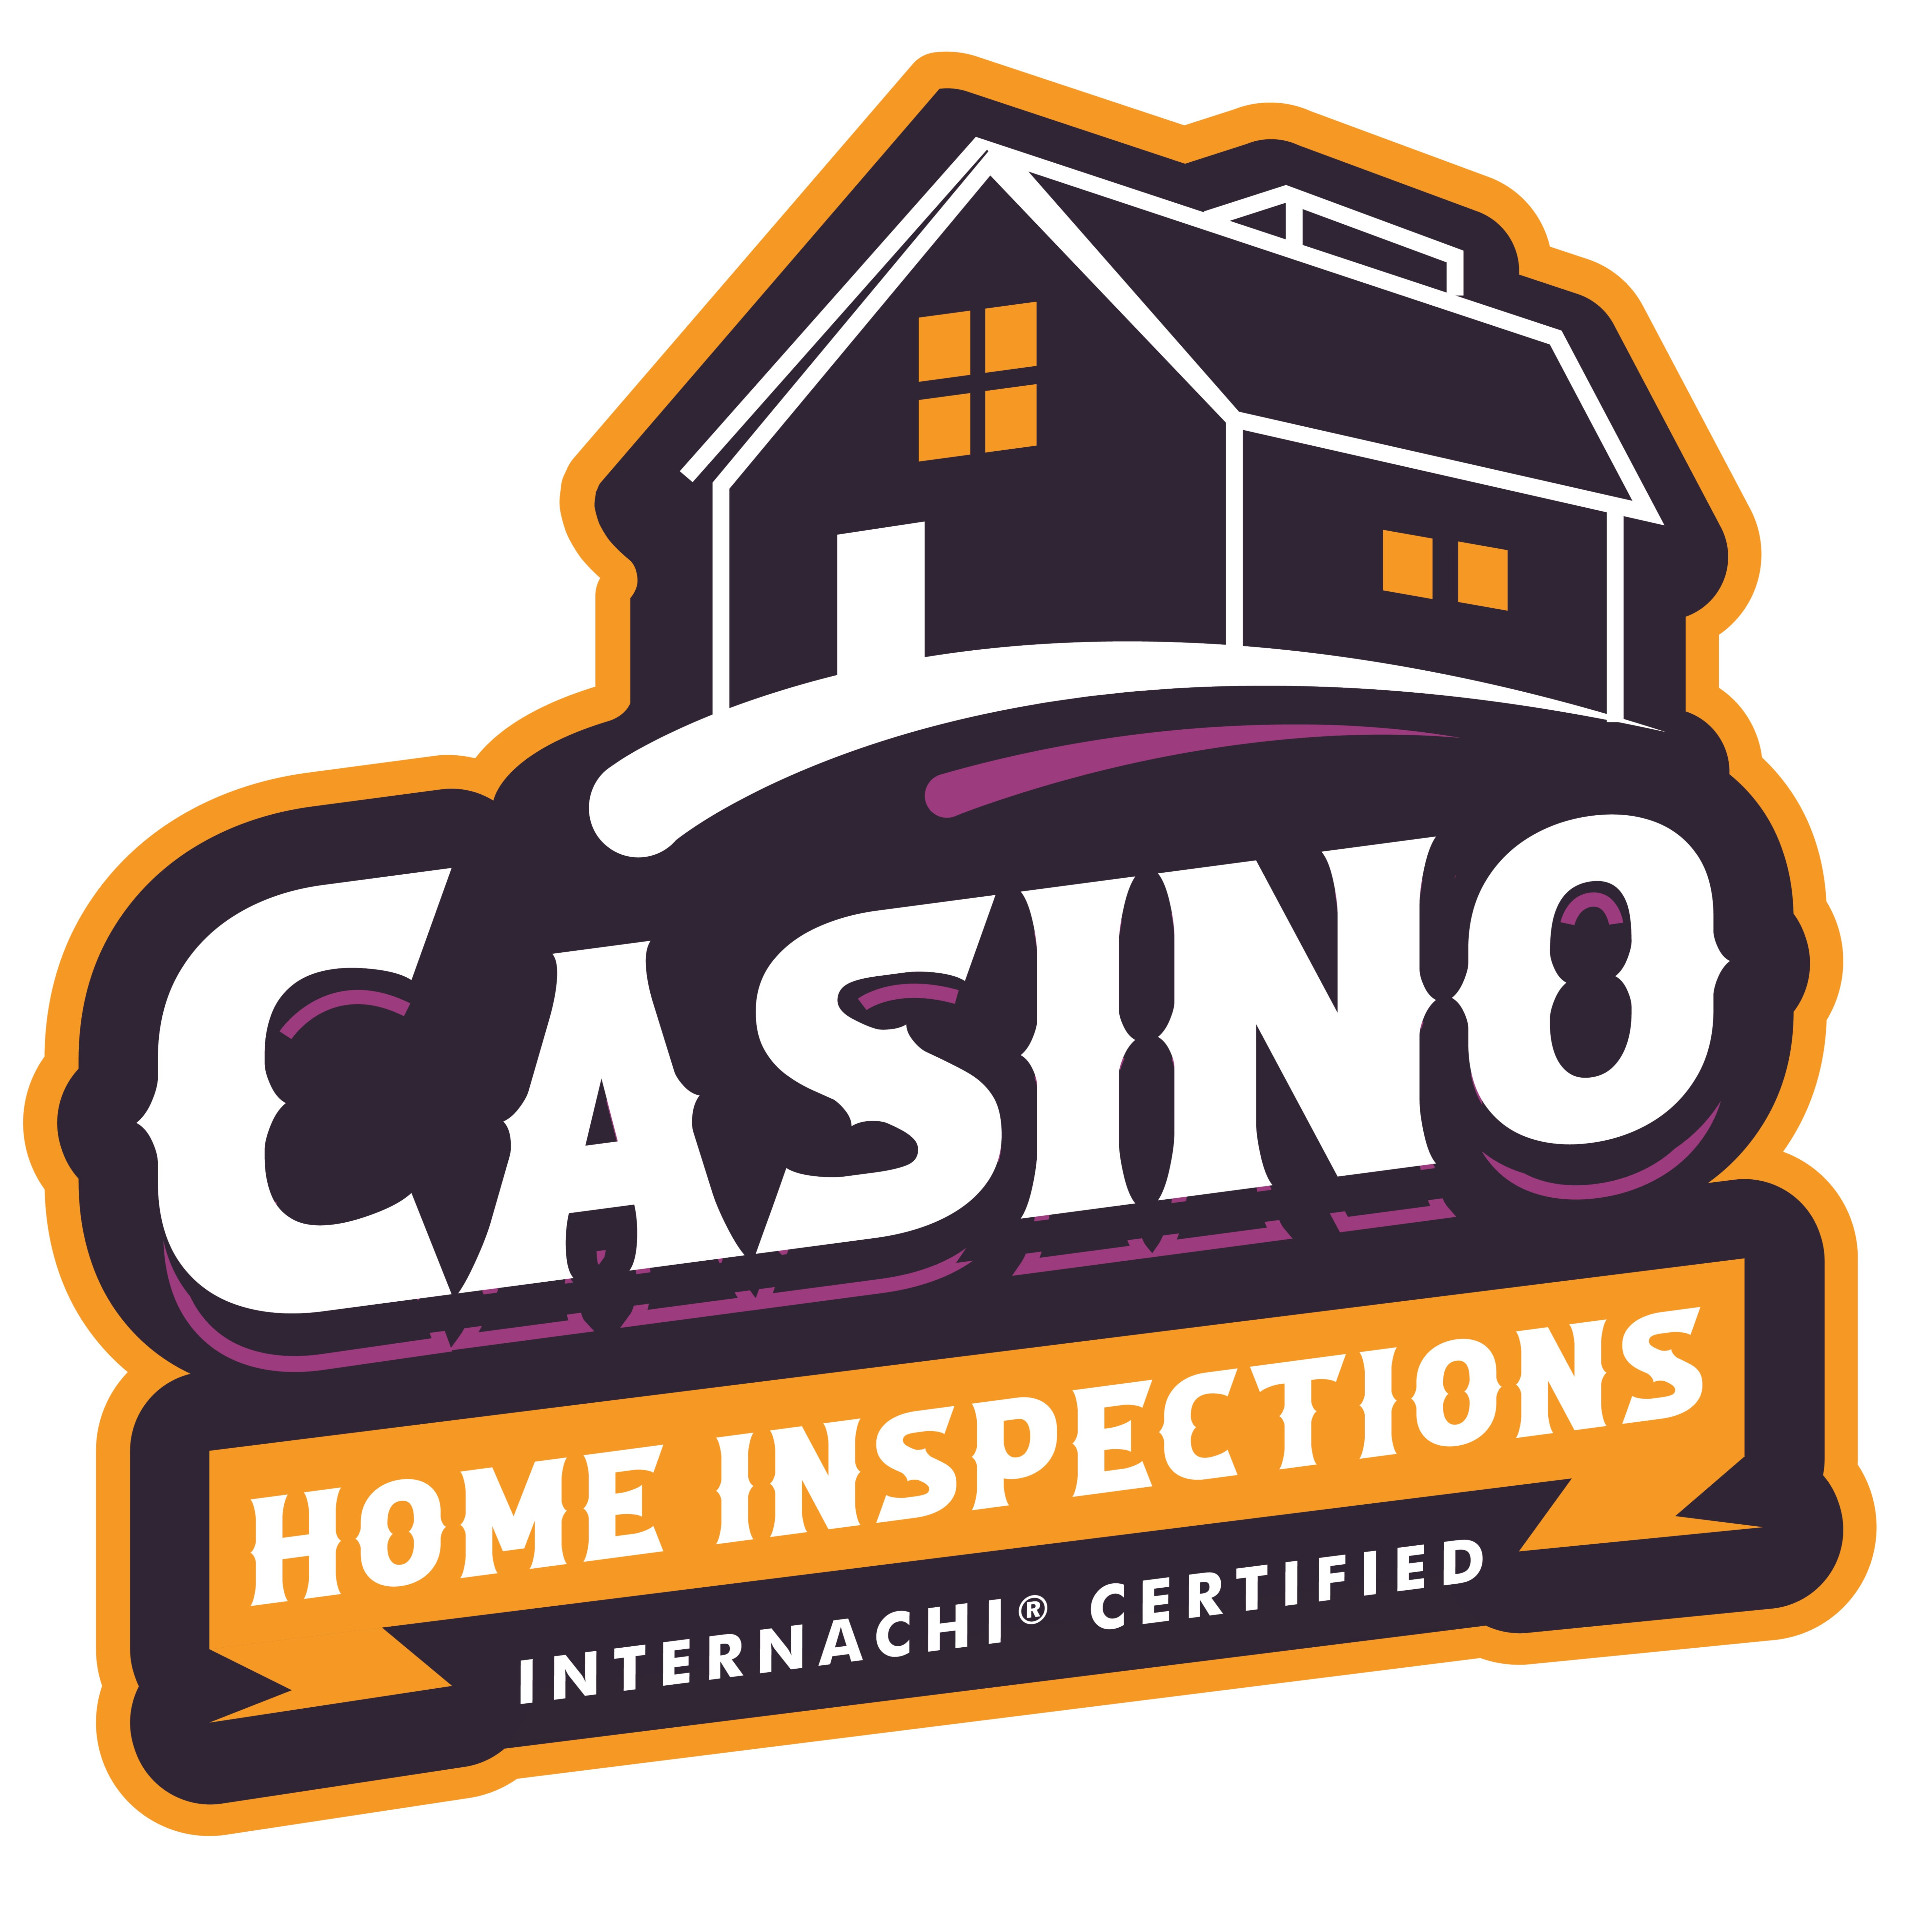 Casino Home Inspections LLC Logo